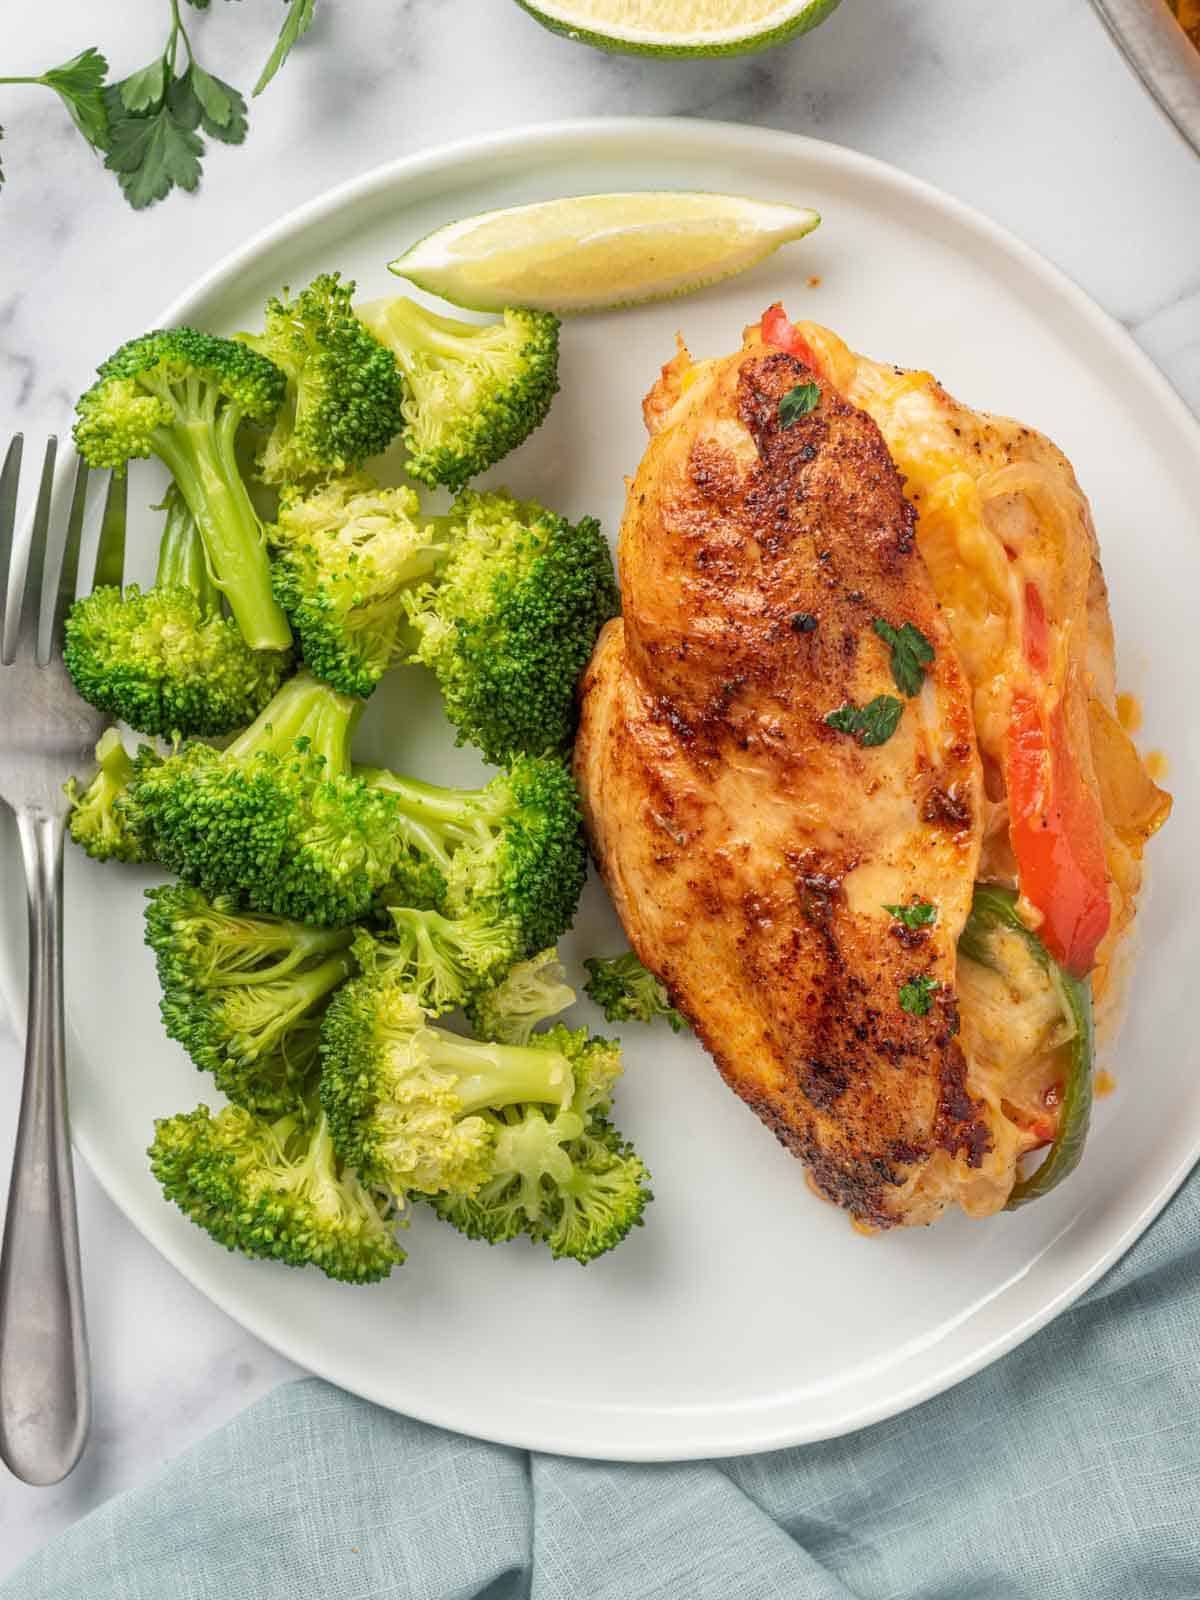 Fajita stuffed chicken on a plate with a side of broccoli.